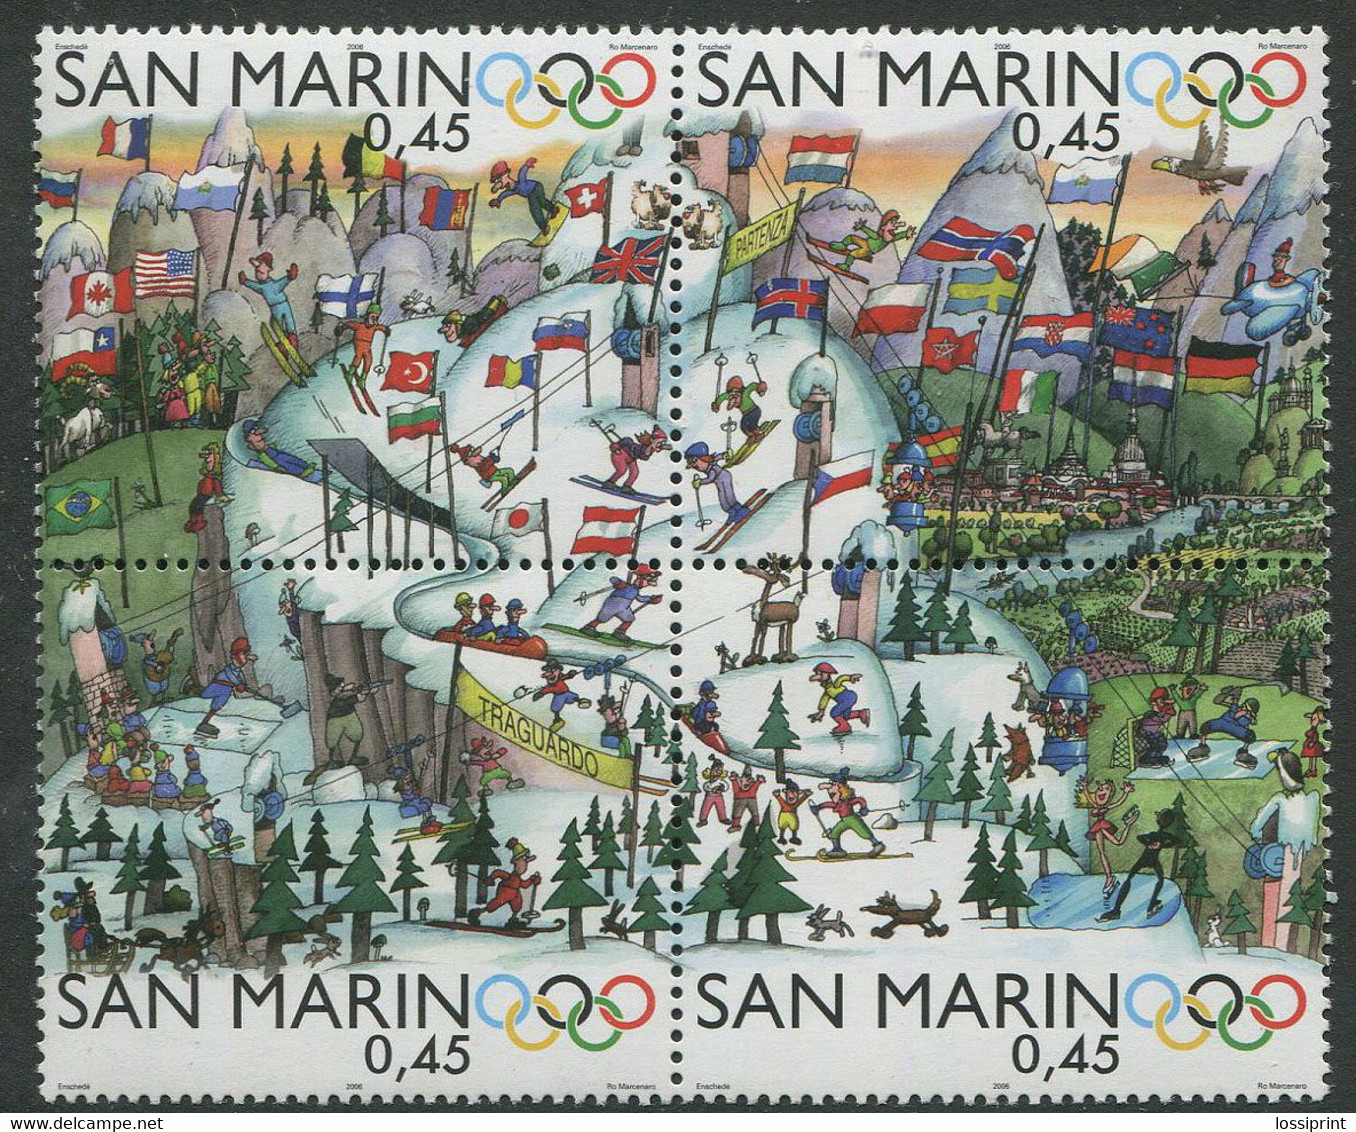 San Marino:Unused Stamps Serie Torino Olympic Games 2006, MNH - Hiver 2006: Torino